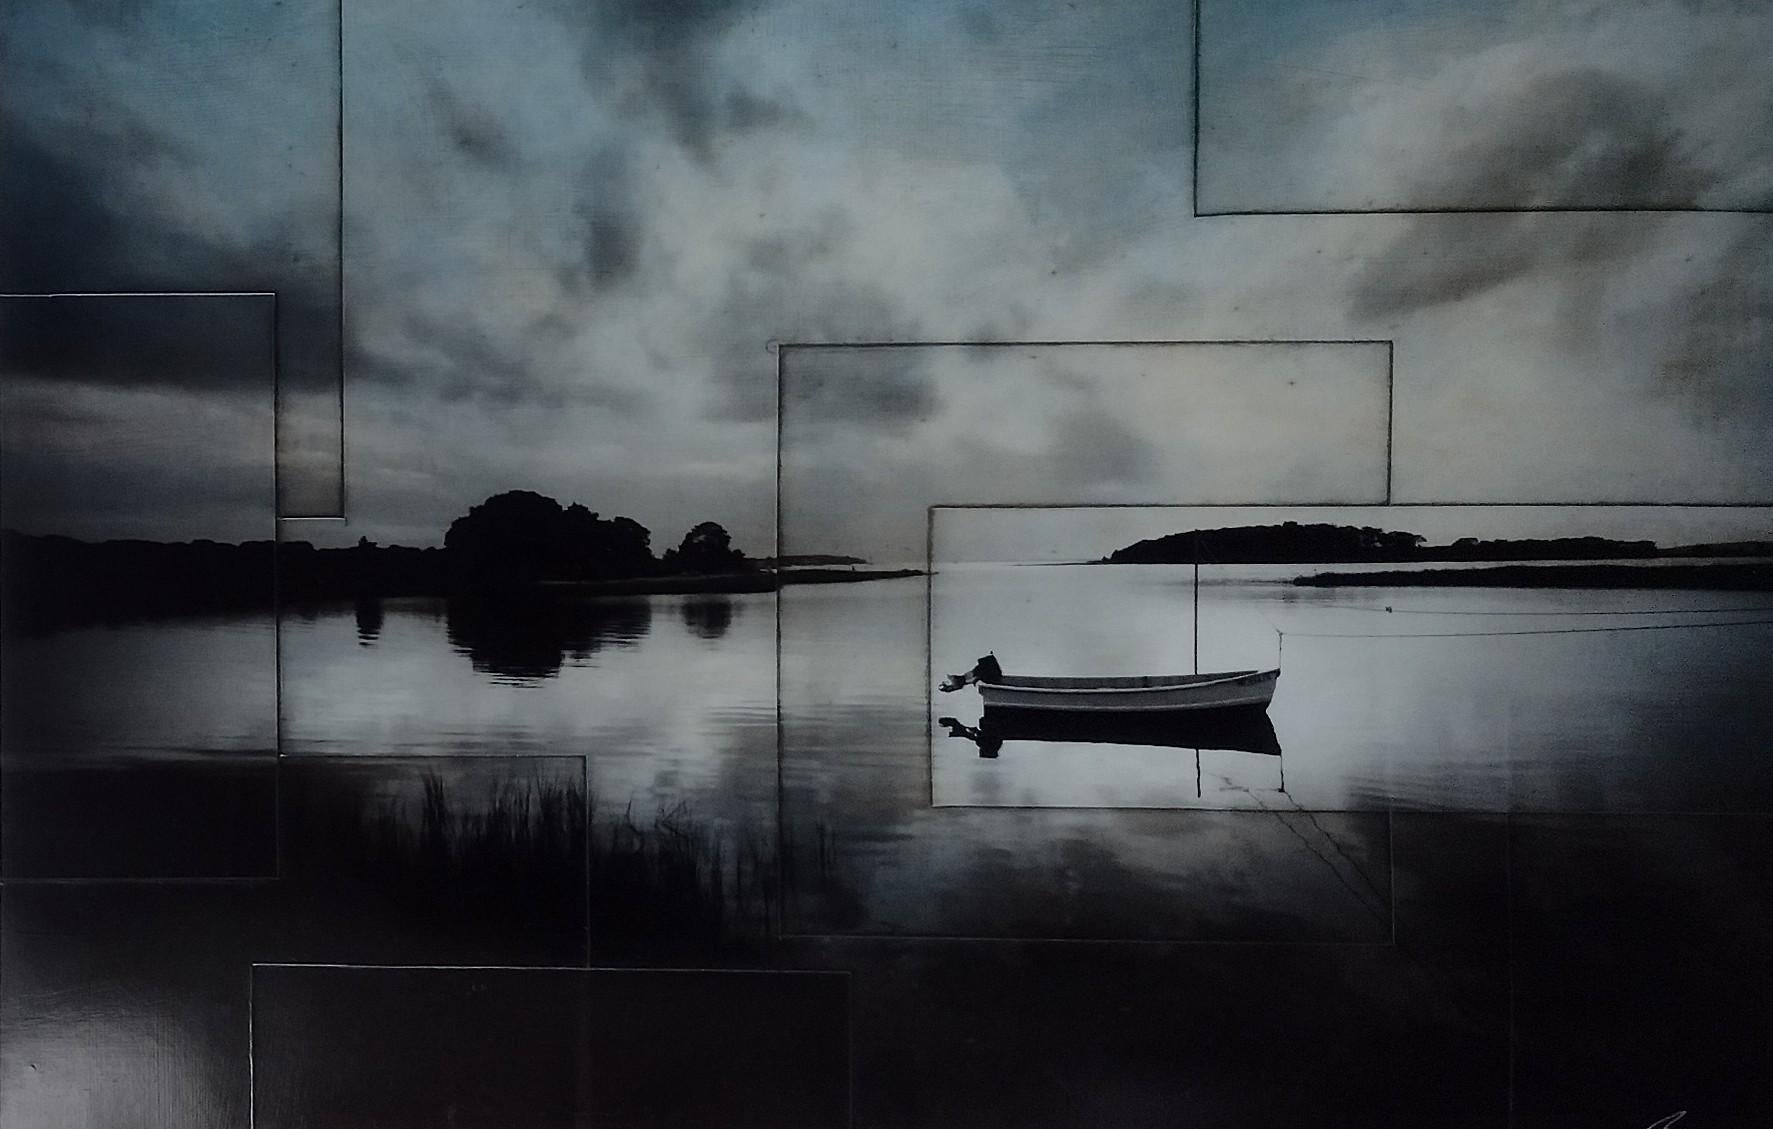 Pezhman  Landscape Photograph - Boat on Lake - Original Photography Collage on Paper